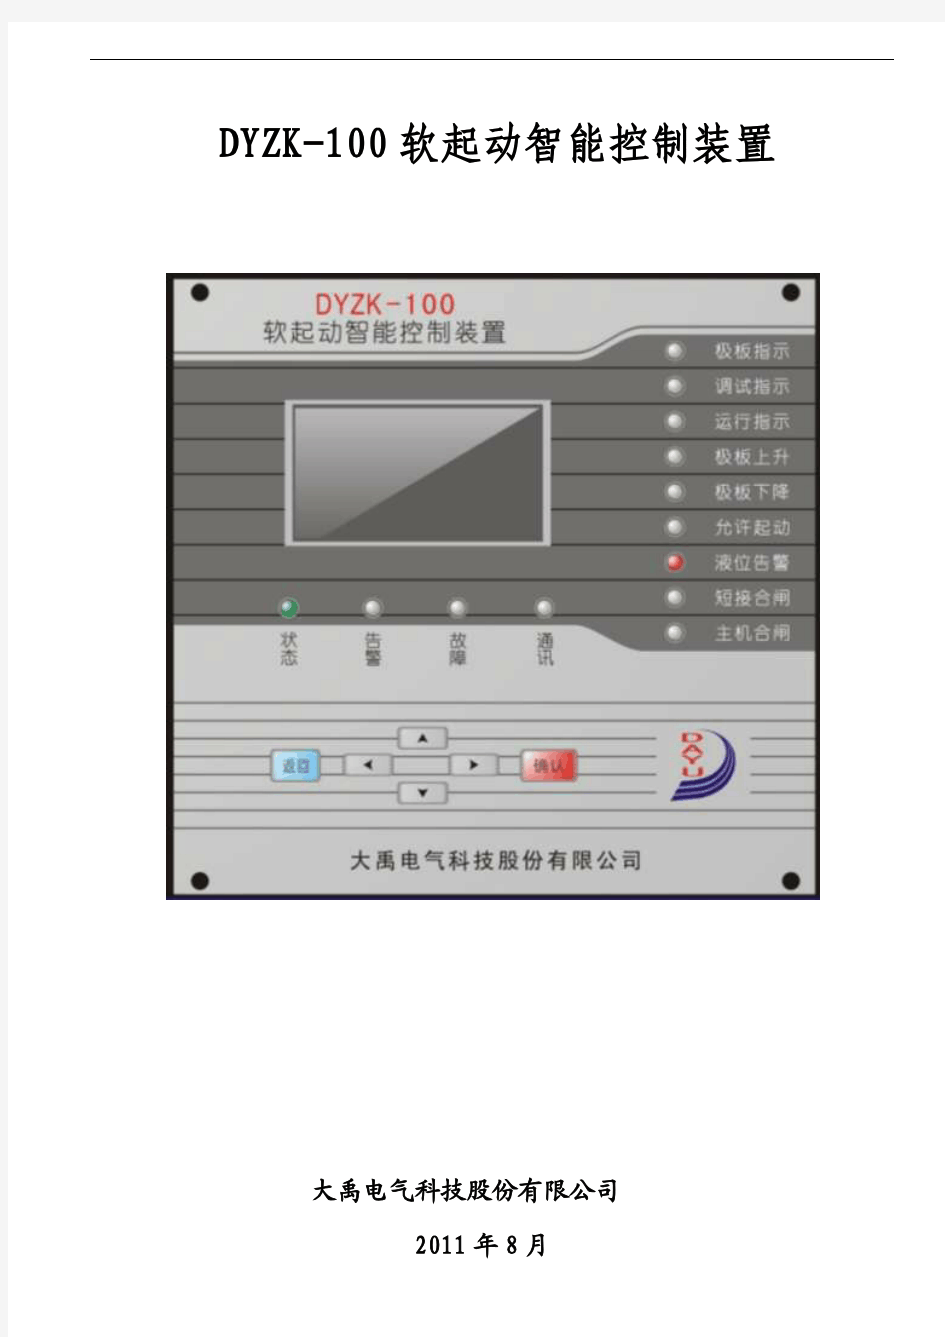 DYZK-100软起动智能控制装置产品使用说明书 -2012-7